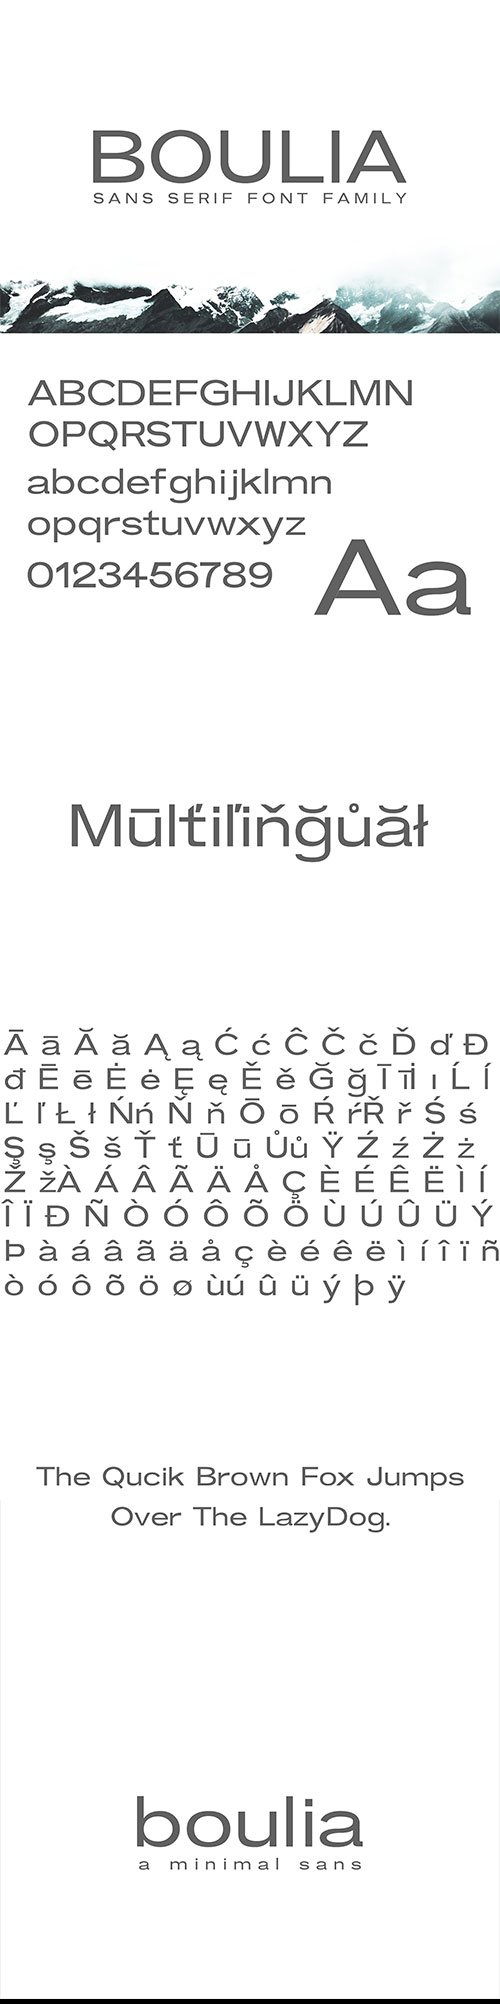 CM - Boulia Sans Serif Font Family 2912151